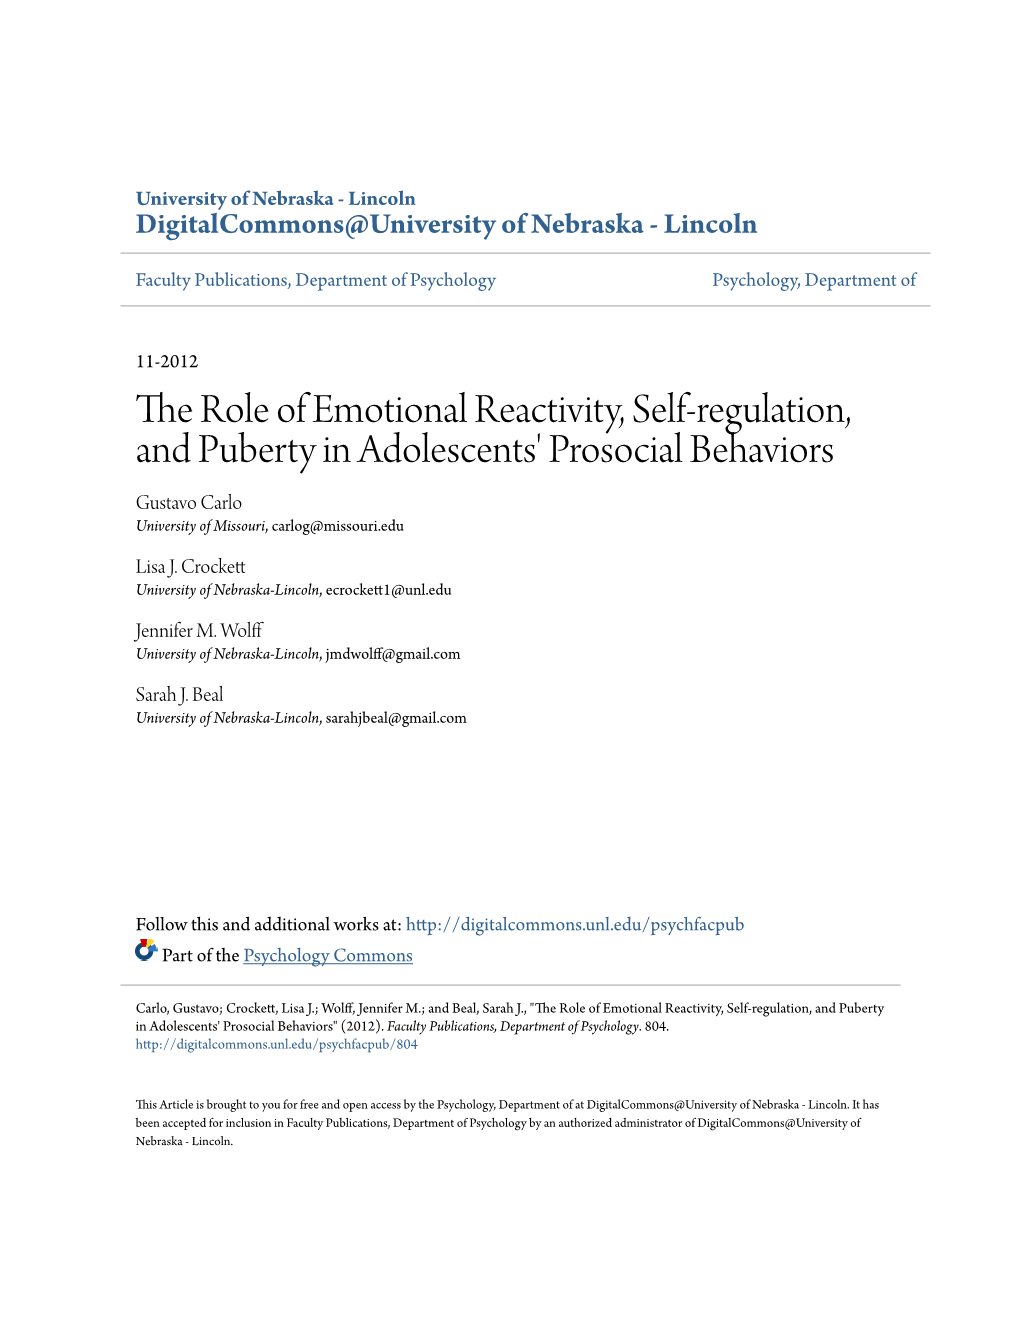 The Role of Emotional Reactivity, Self-Regulation, and Puberty in Adolescents' Prosocial Behaviors Gustavo Carlo University of Missouri, Carlog@Missouri.Edu